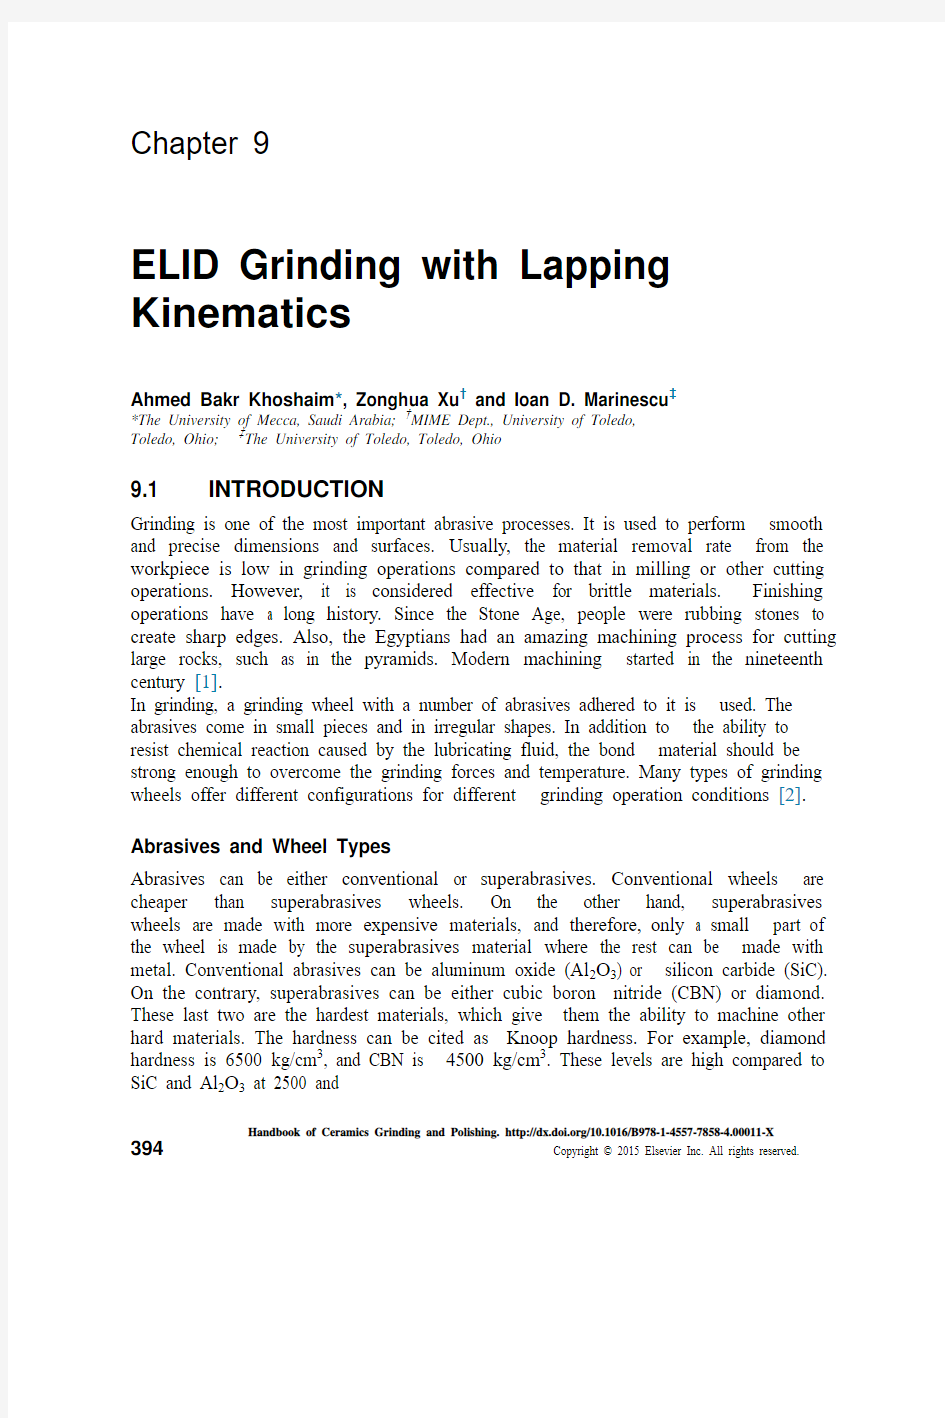 Chapter9-ELIDGrindingwithLappingKinematics.pdf